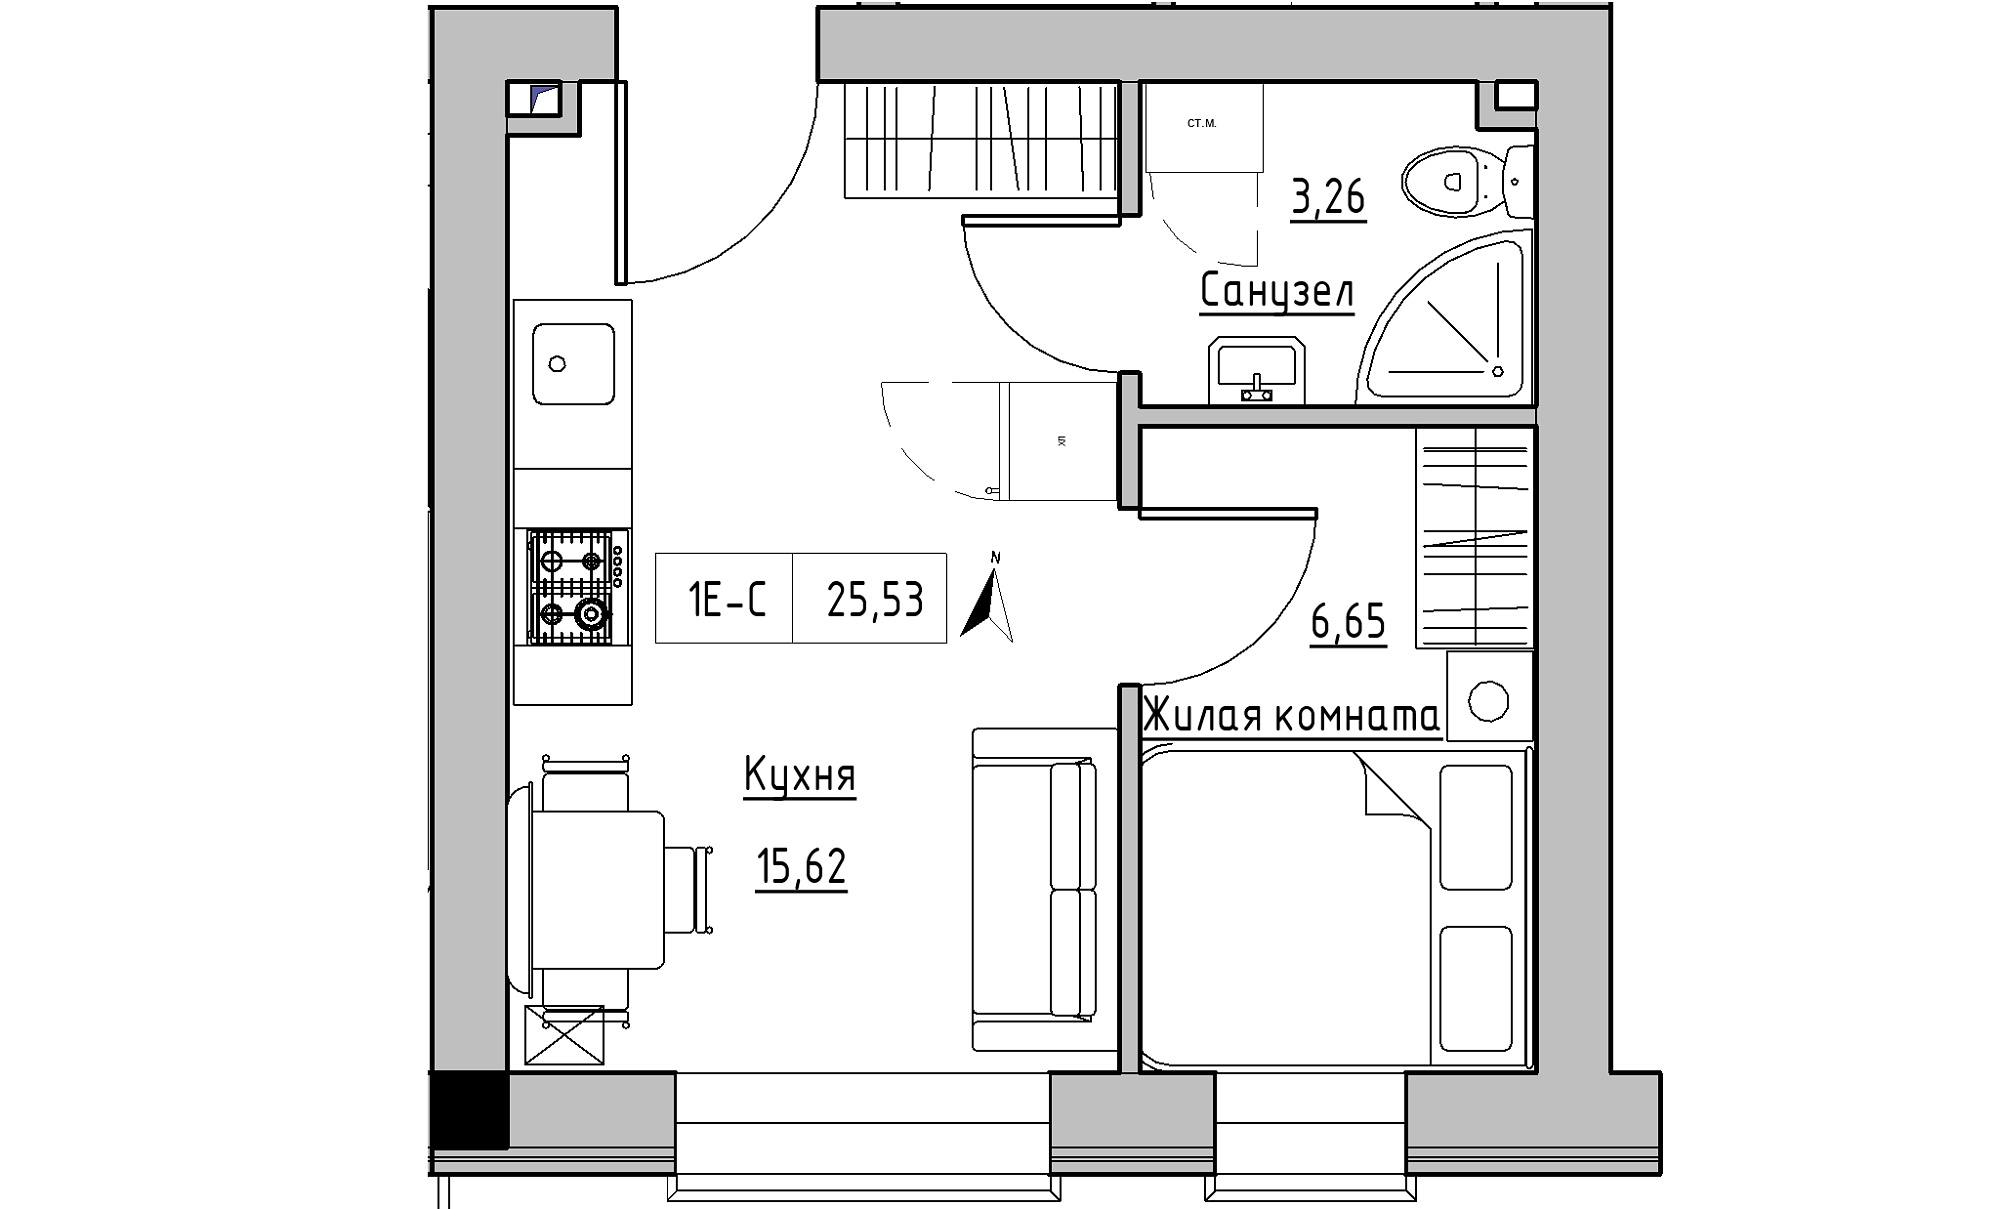 Planning 1-rm flats area 25.53m2, KS-016-05/0004.